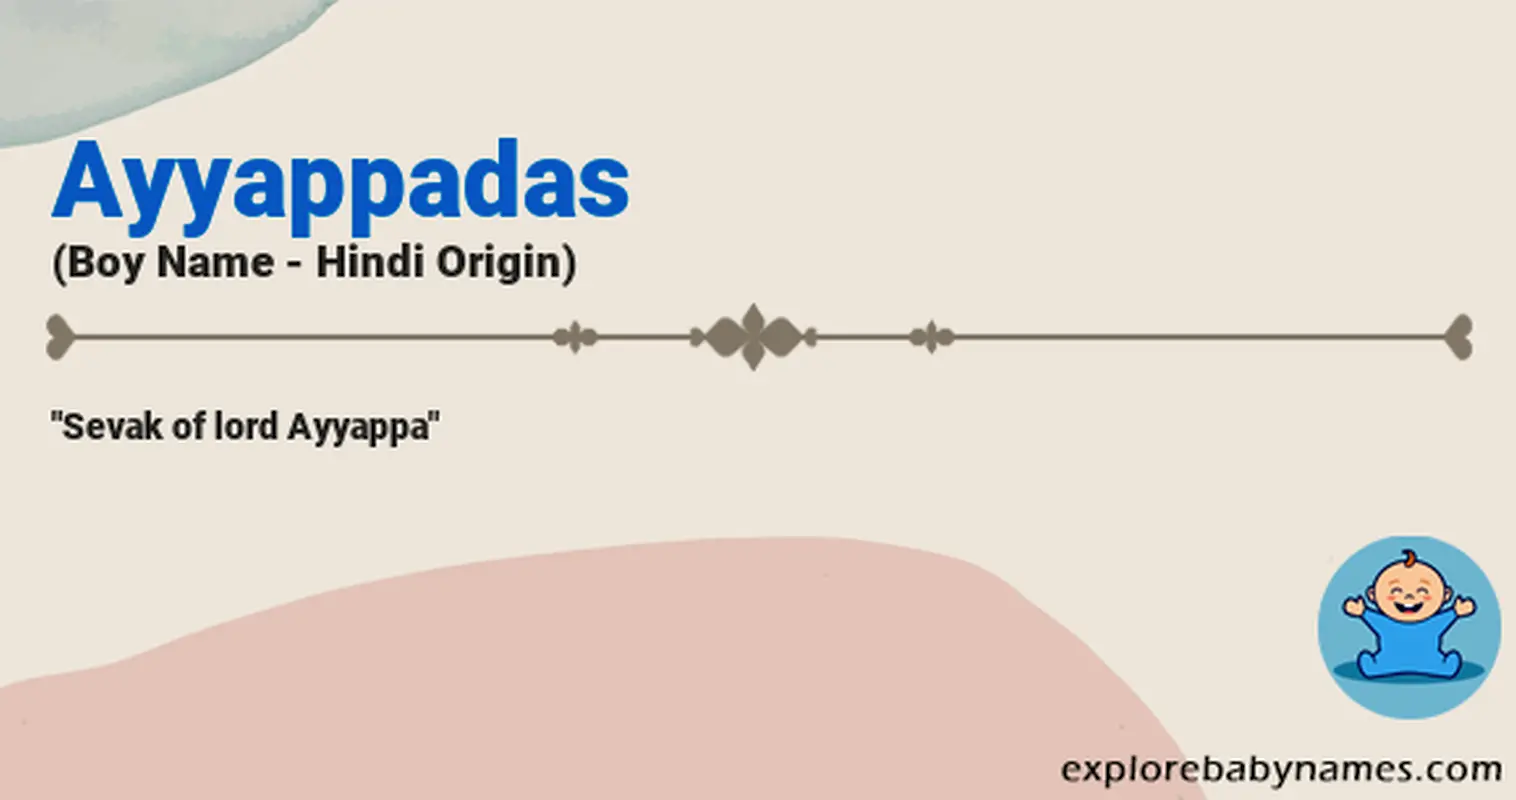 Meaning of Ayyappadas